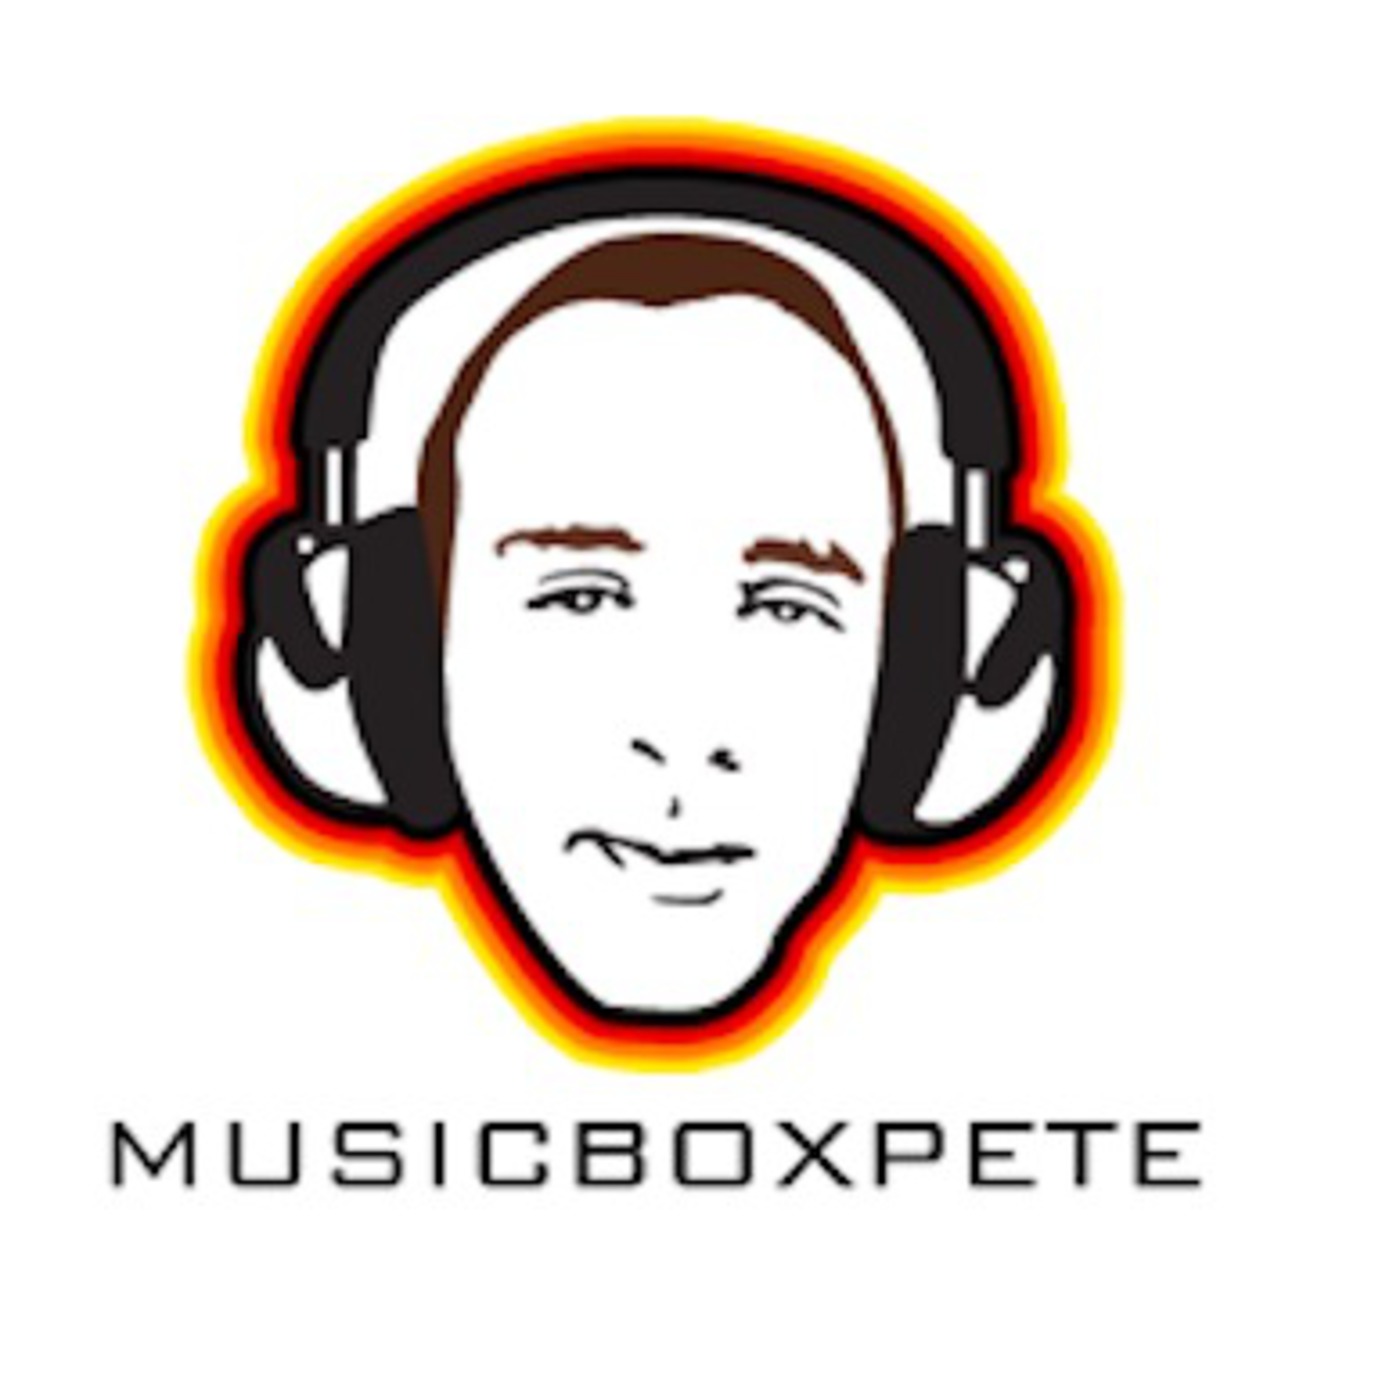 MusicBoxPete Podcast - Episode 1